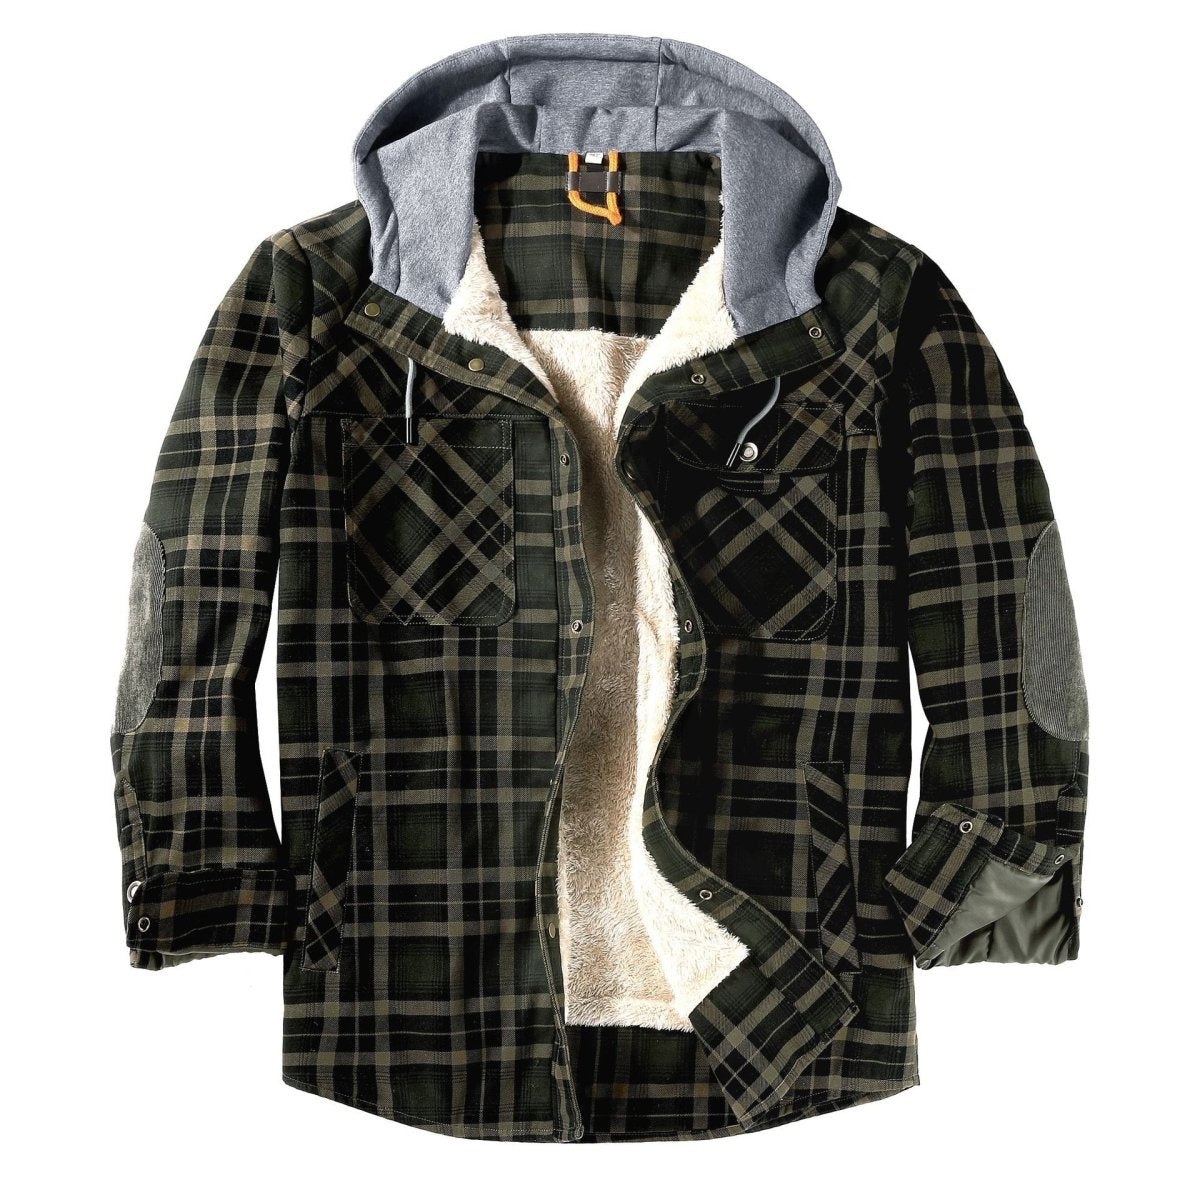 Mens Fleece Lining Basic Shirt Jacket With Hood - Geeksoutfit